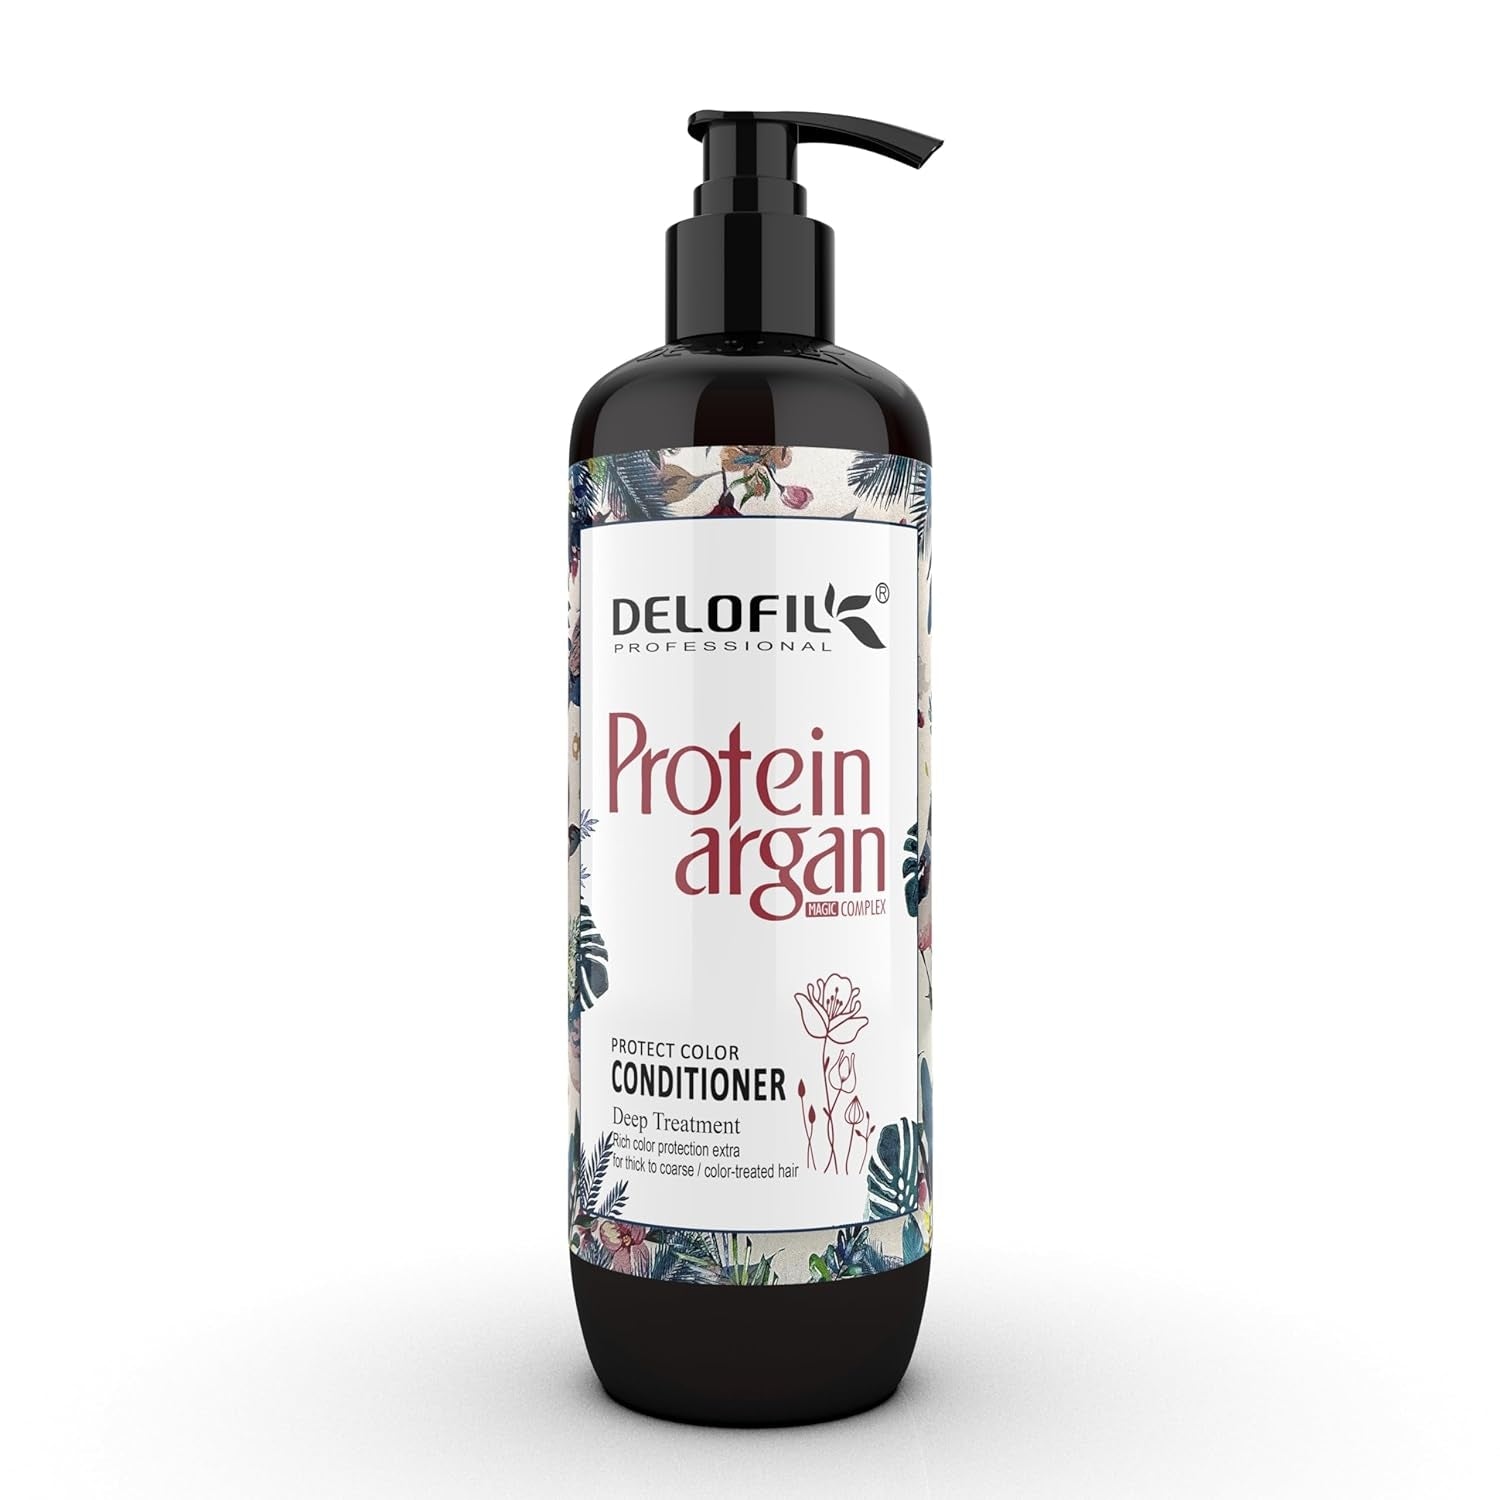 DELOFIL Argan Oil Protein Magic Complex Protect Color Conditioner 500ml - FlyingCart.pk